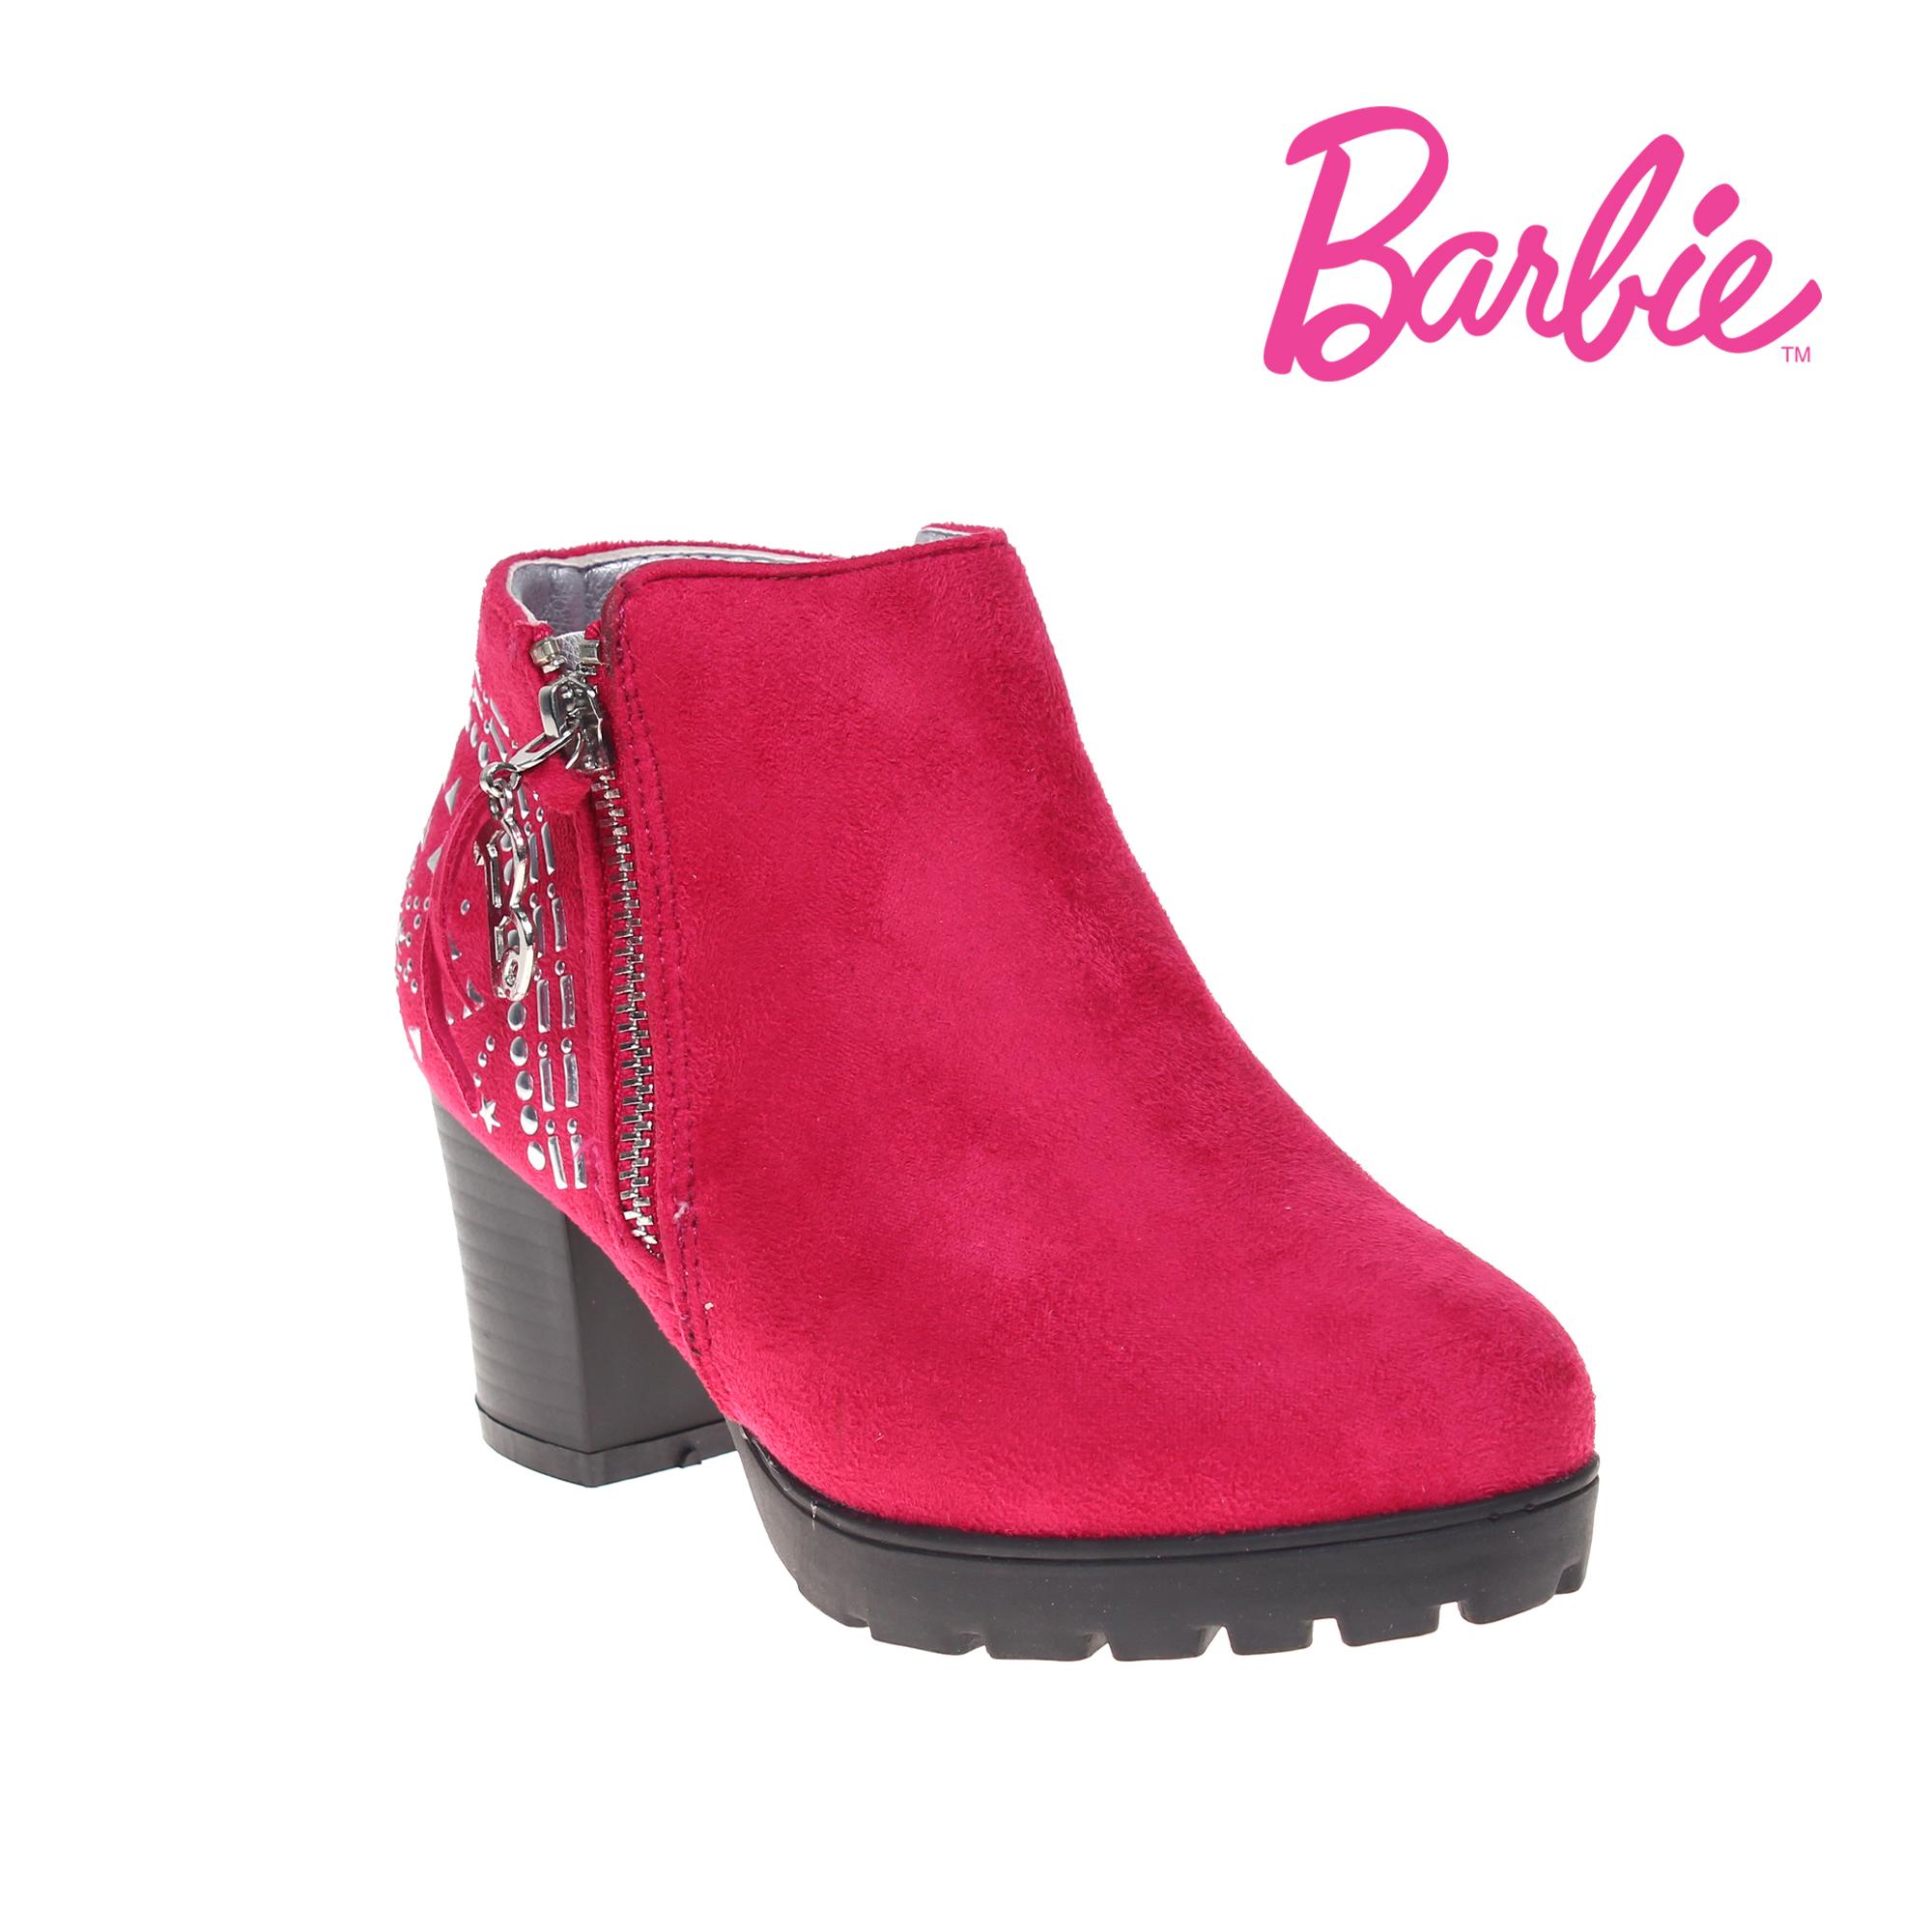 Buy Barbie Shoes Boots Online | lazada 